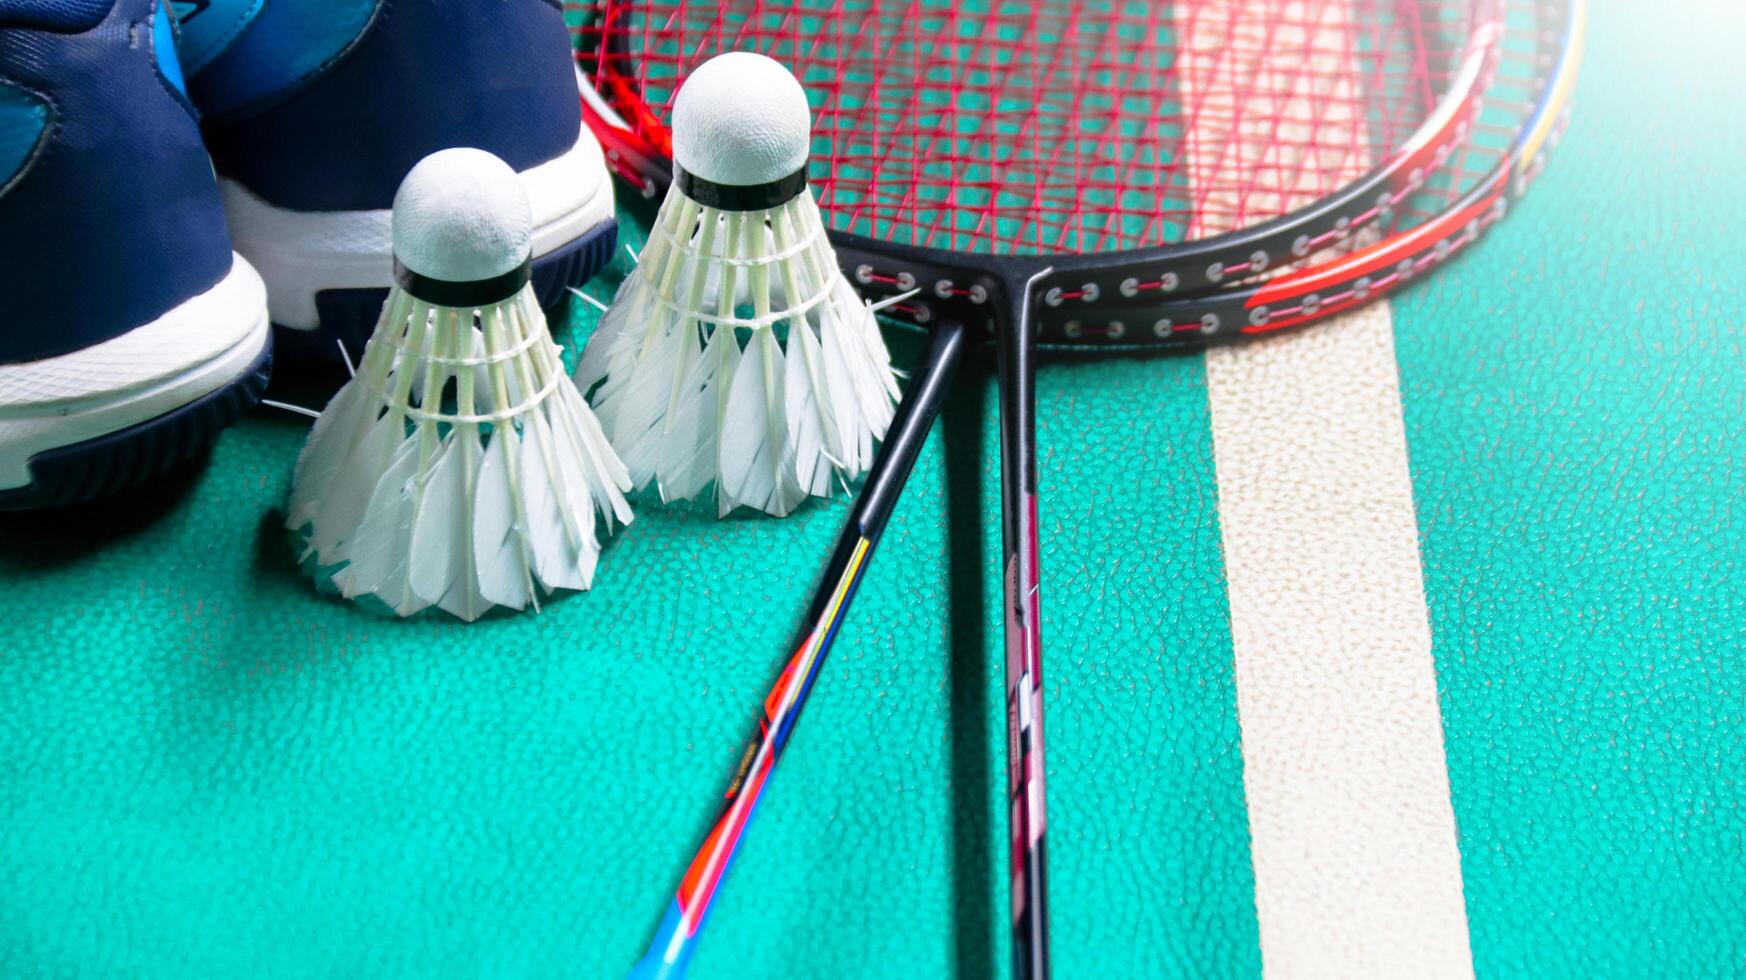 White badminton shuttlecocks and badminton rackets on green floor indoor badminton court soft and selective focus on shuttlecocks and the rackets photo